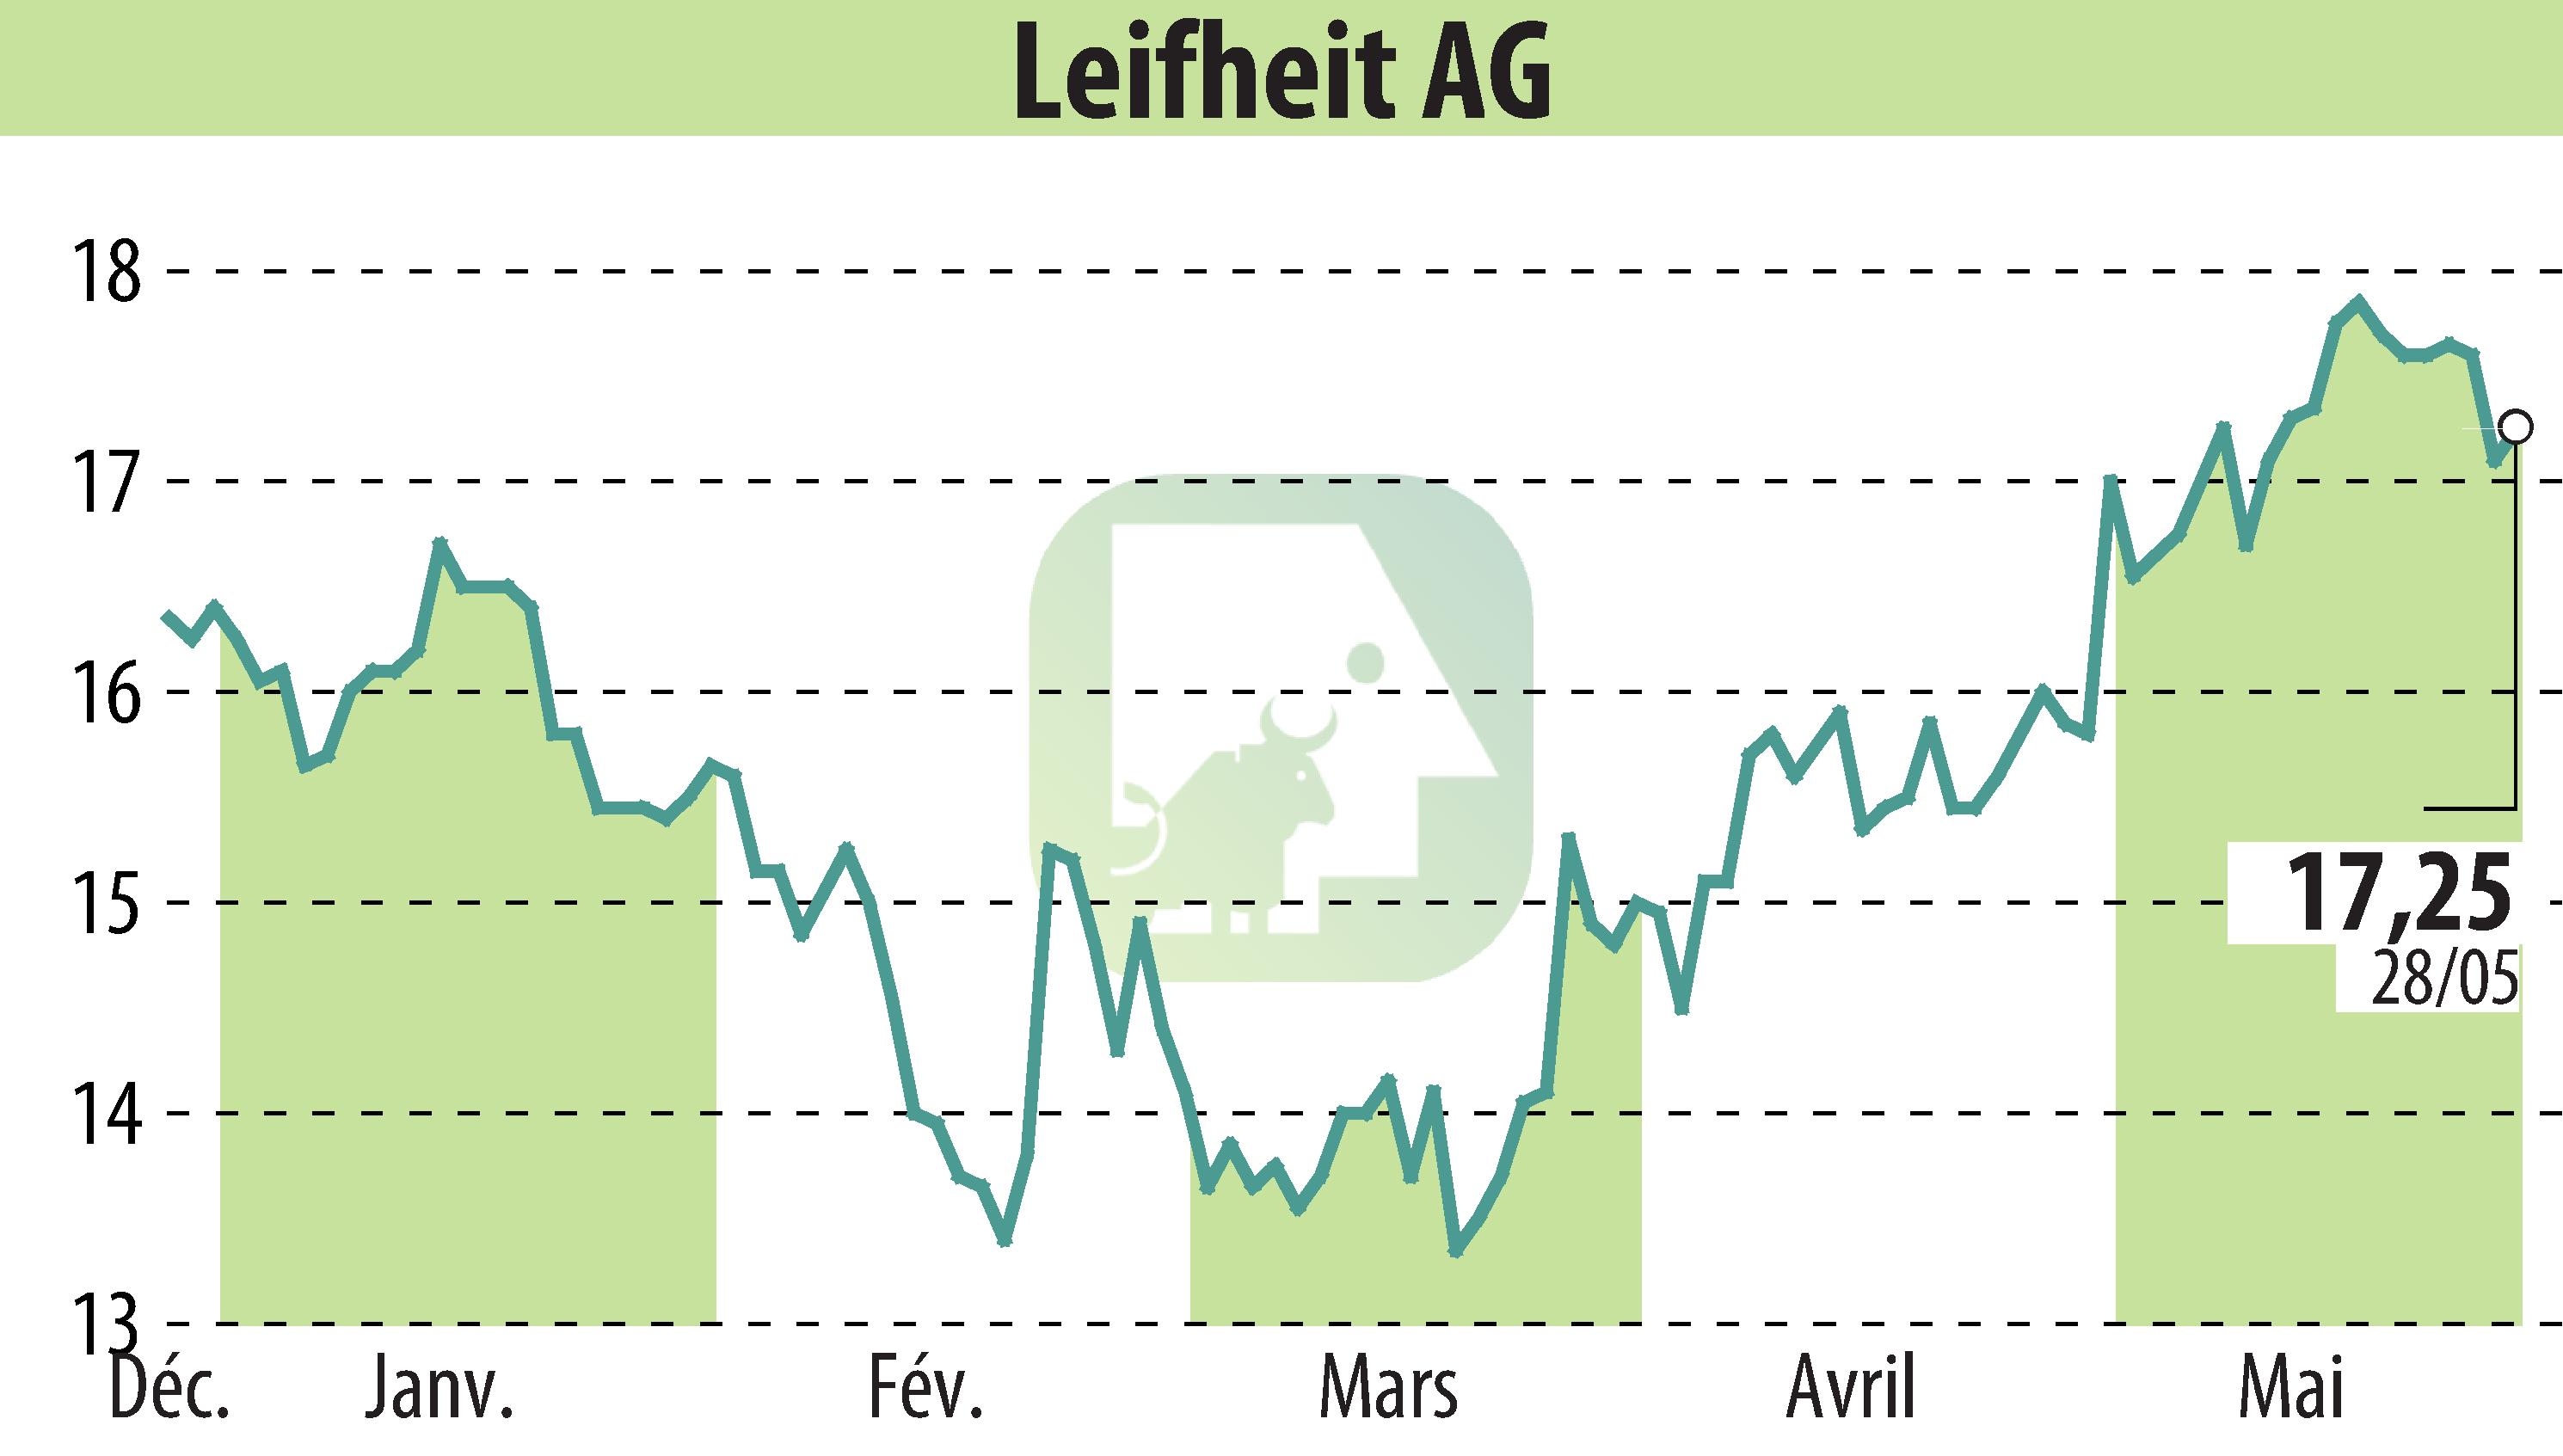 Stock price chart of Leifheit Aktiengesellschaft (EBR:LEI) showing fluctuations.